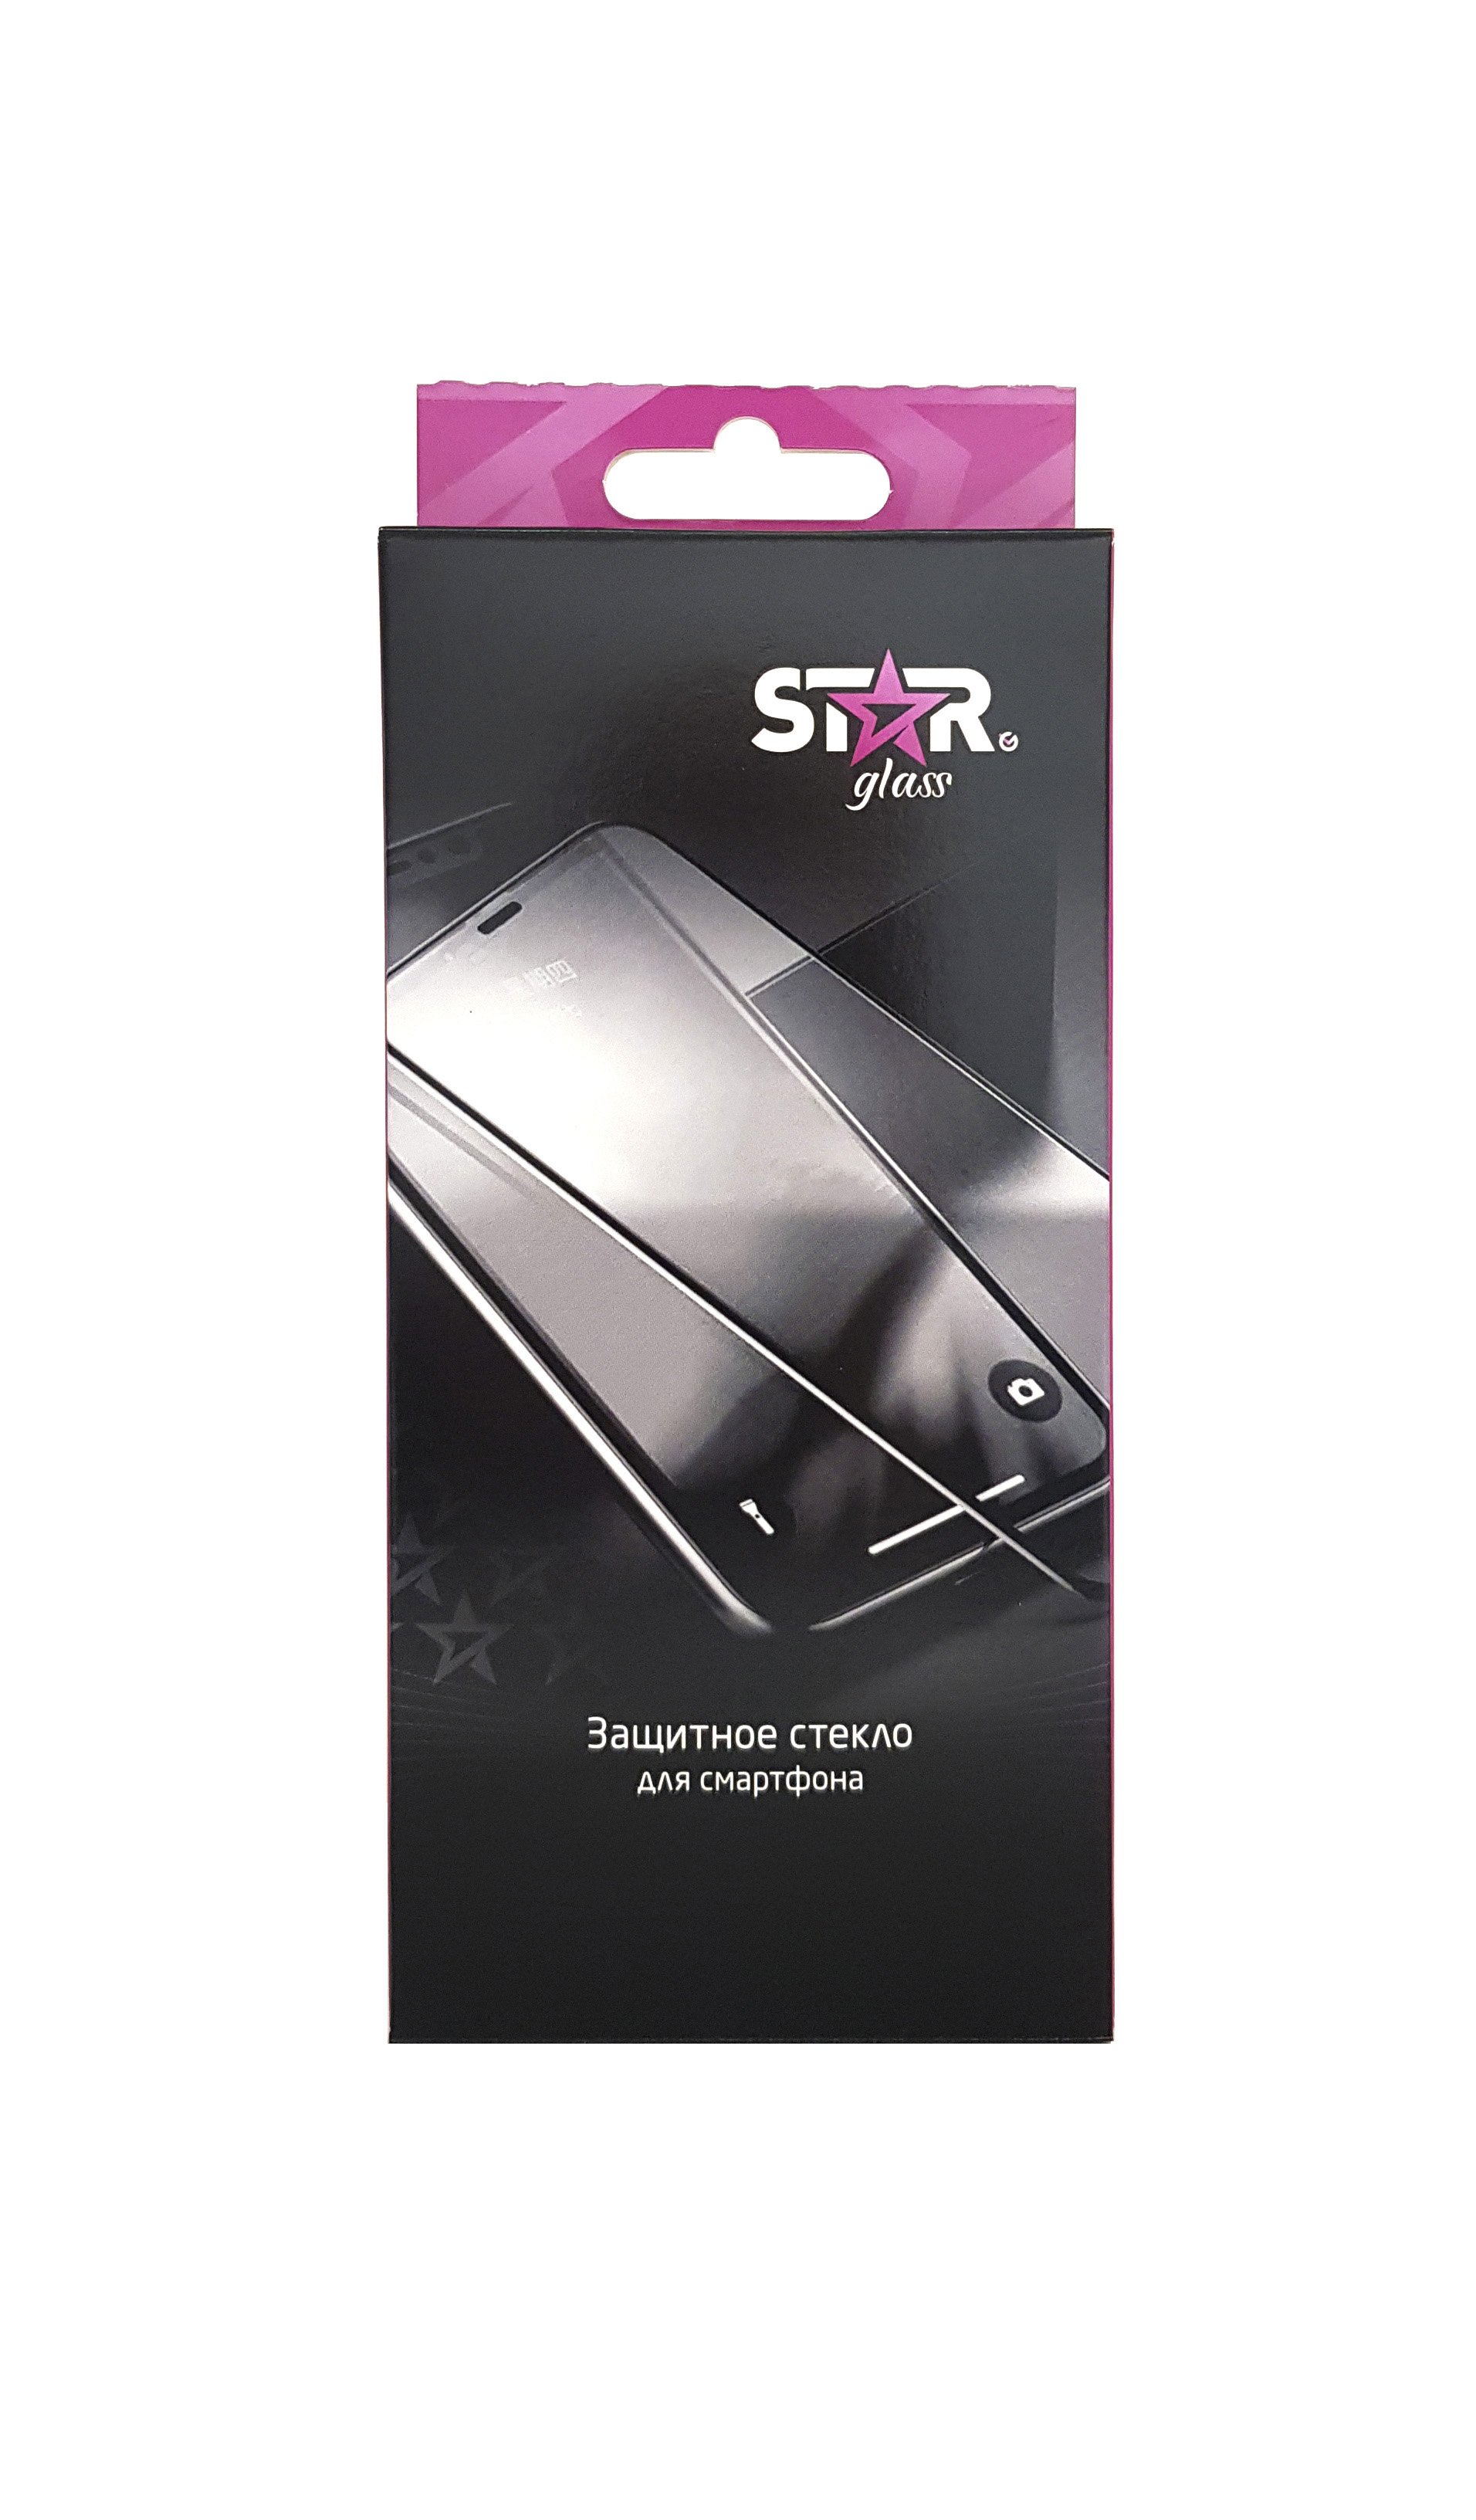 Защитное стекло Star glass для Samsung Galaxy S10 Black